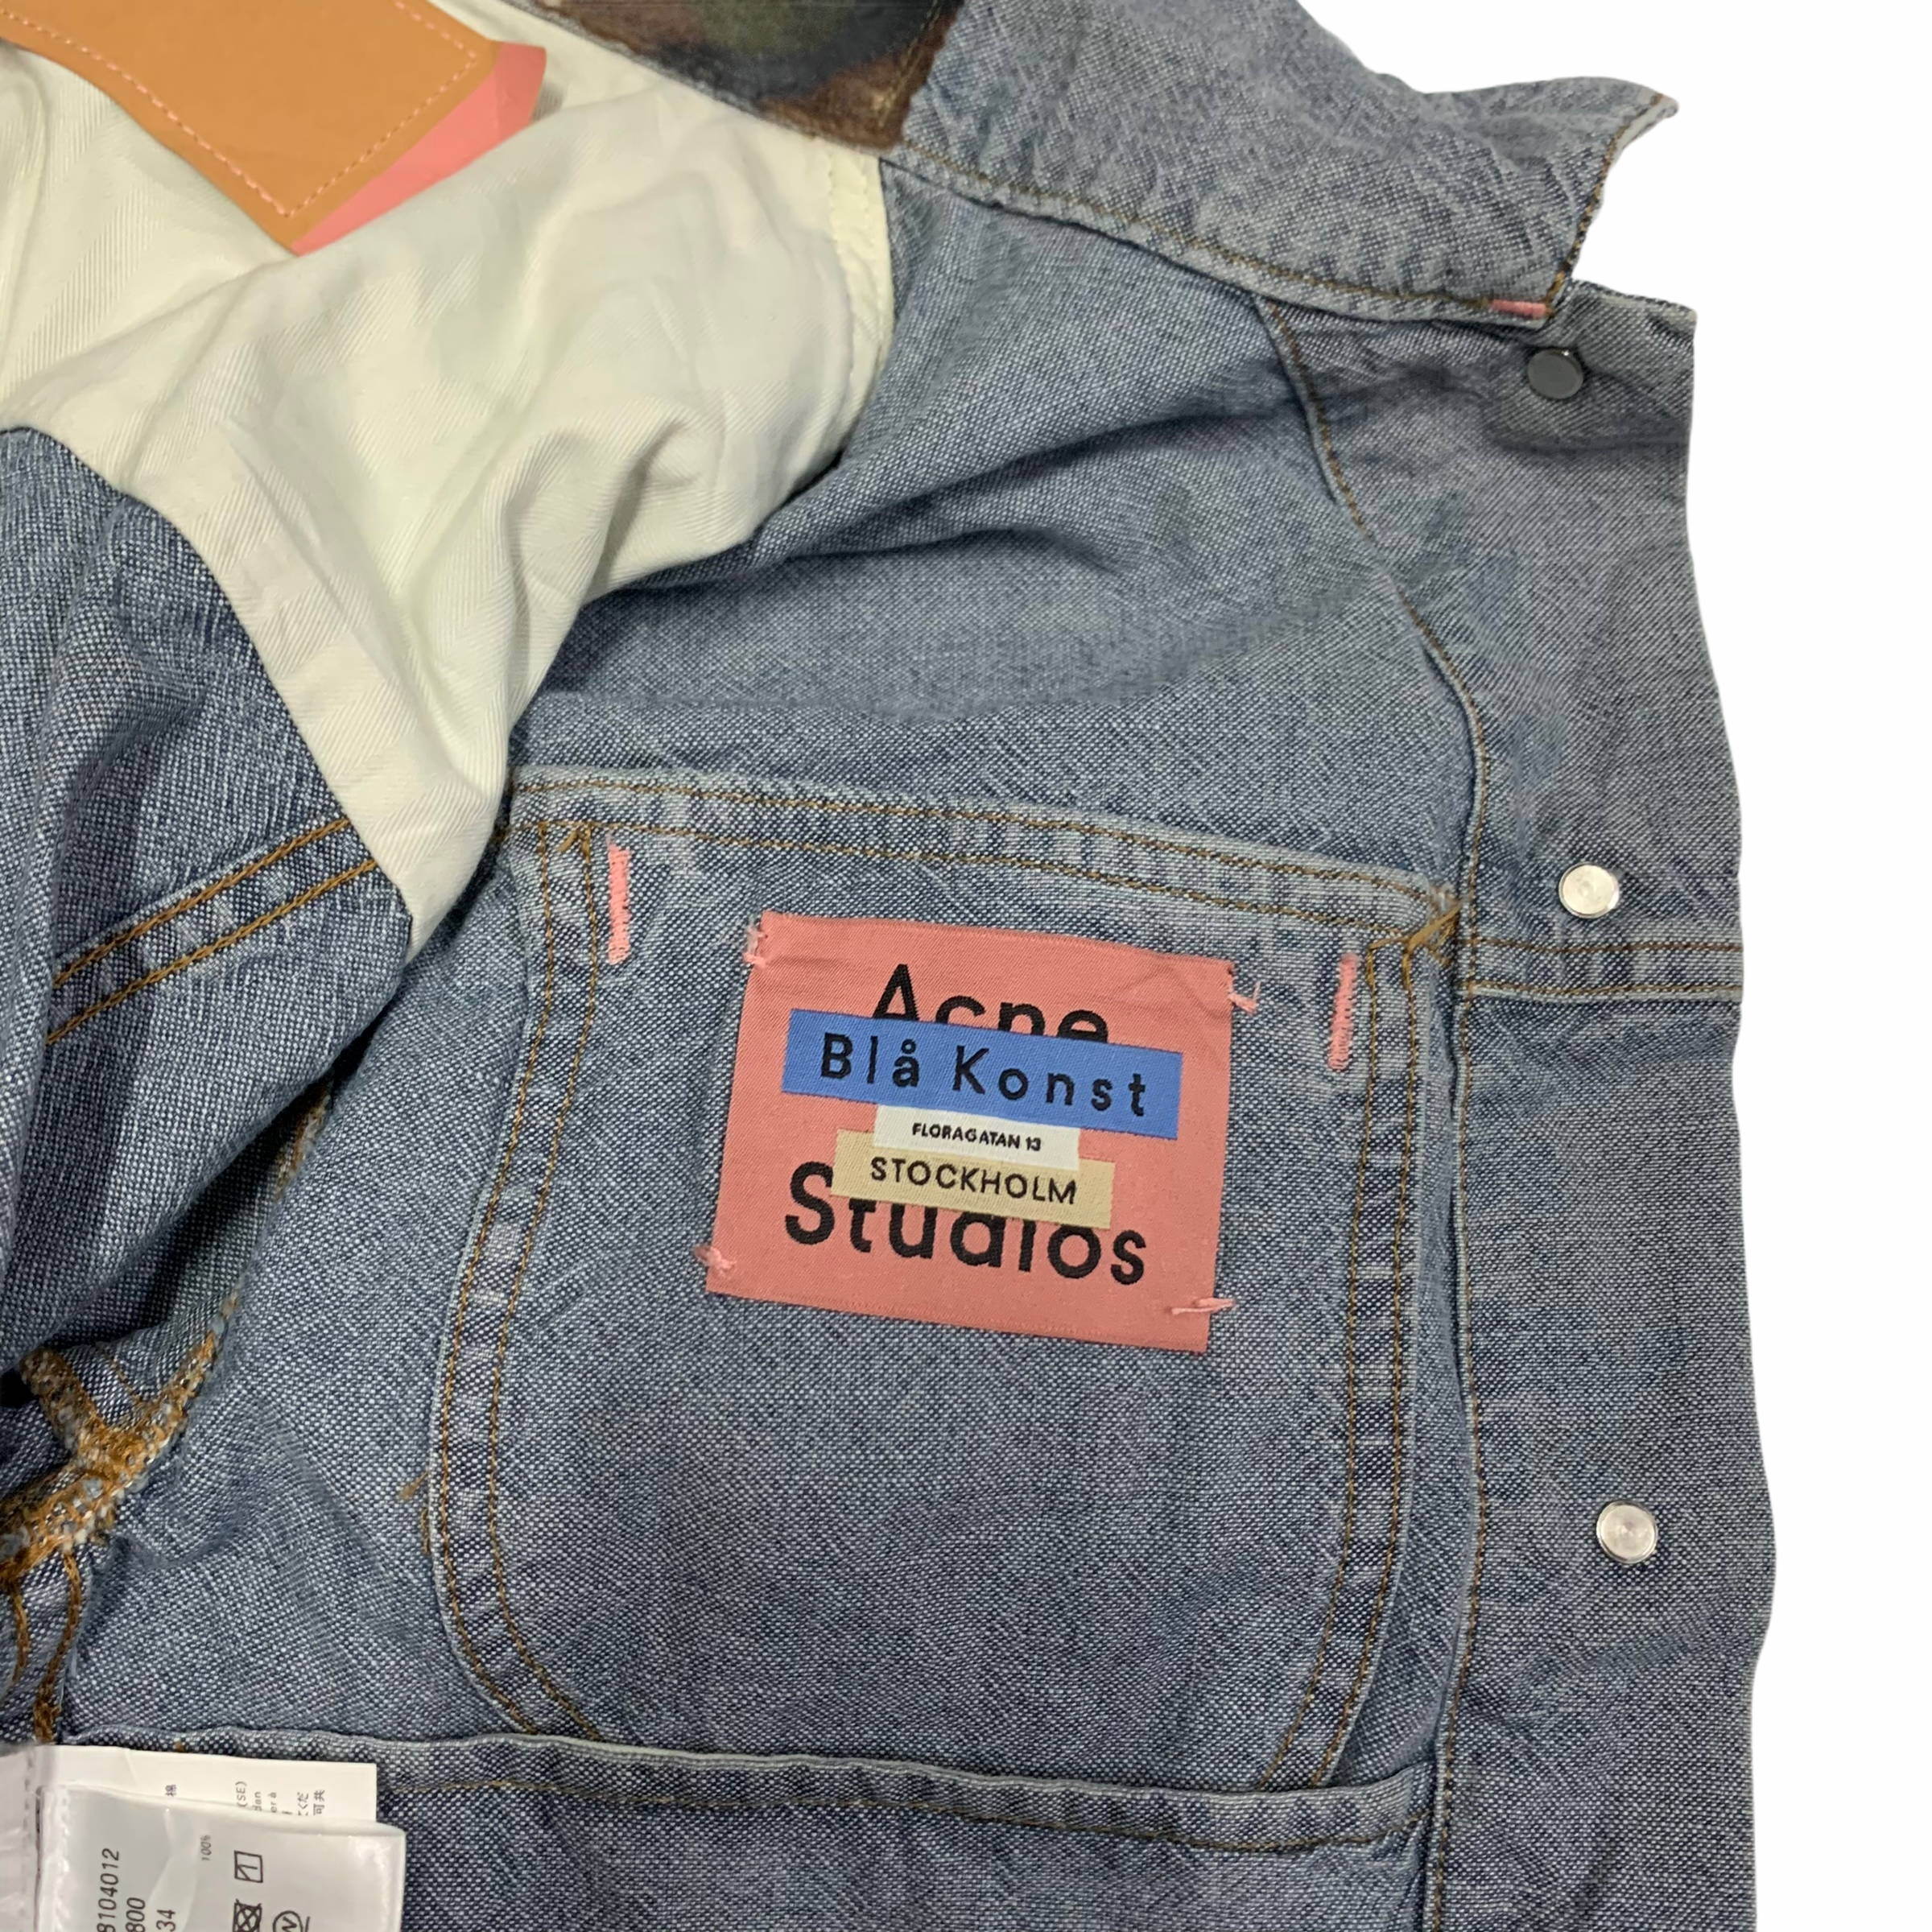 Acne Studios Denim Jacket / Trucker Jacket #2905-60 - 8